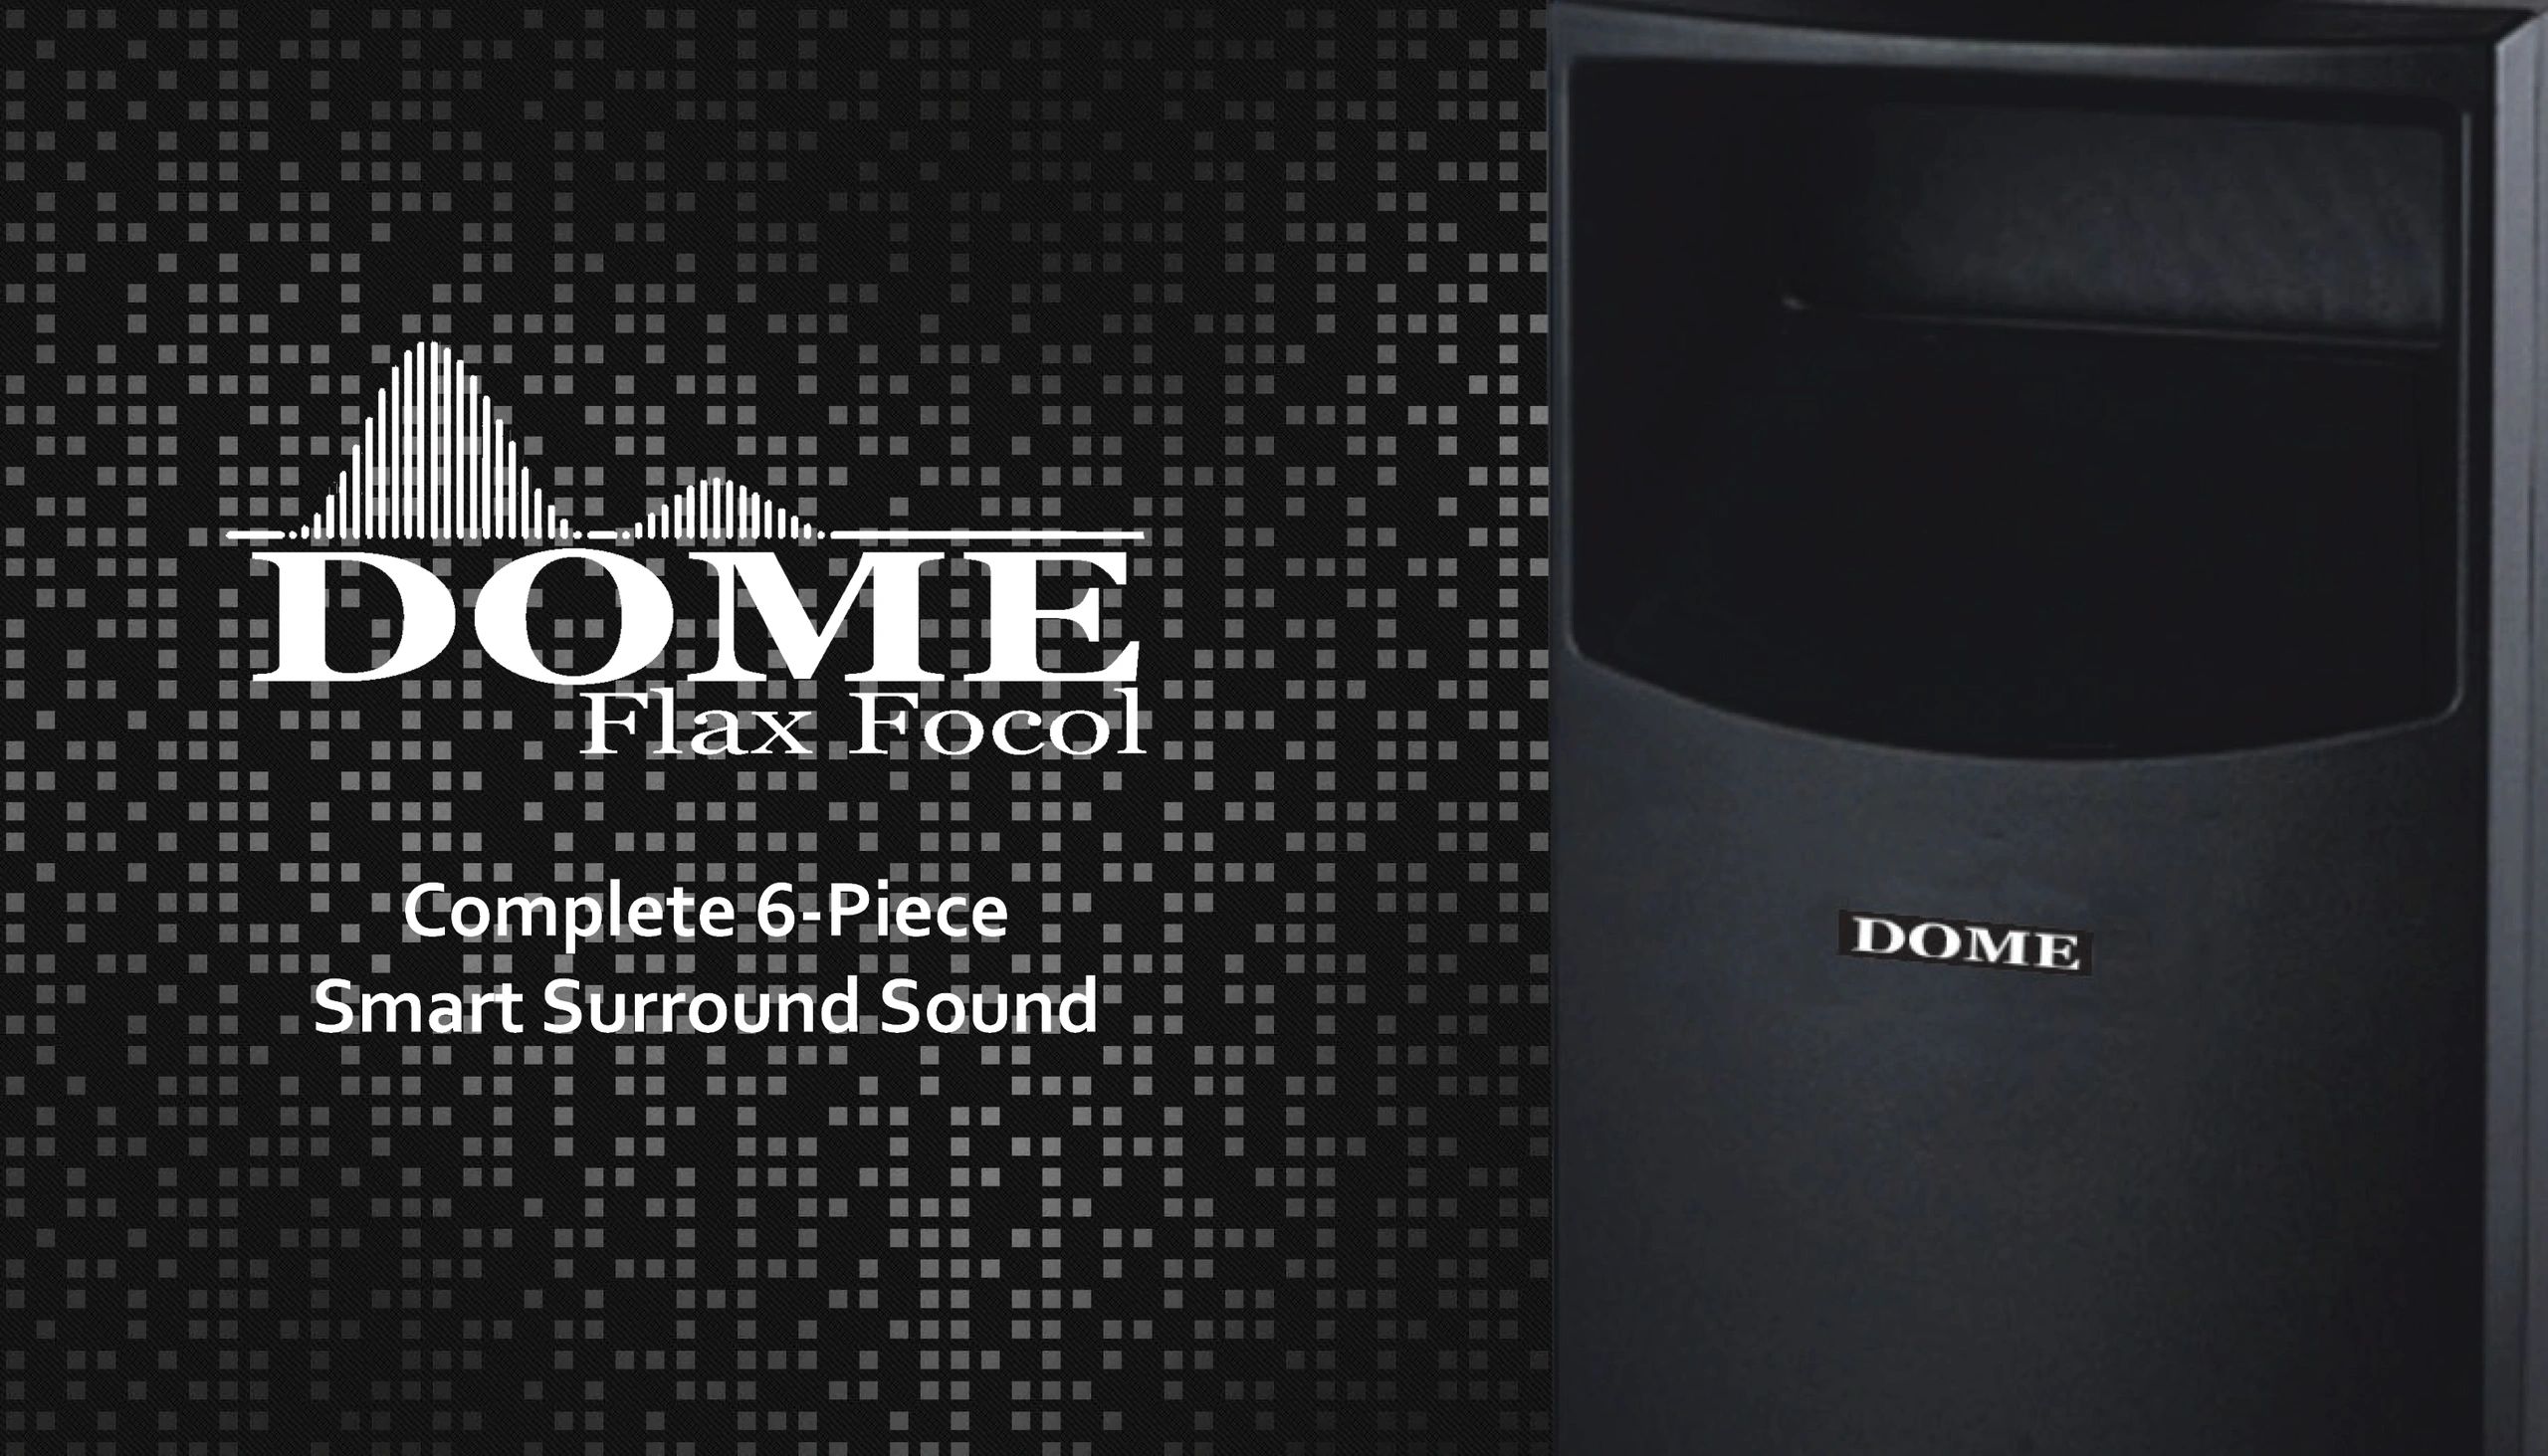 Focal Dome Flax altavoces 5.1 - Audio y Cine